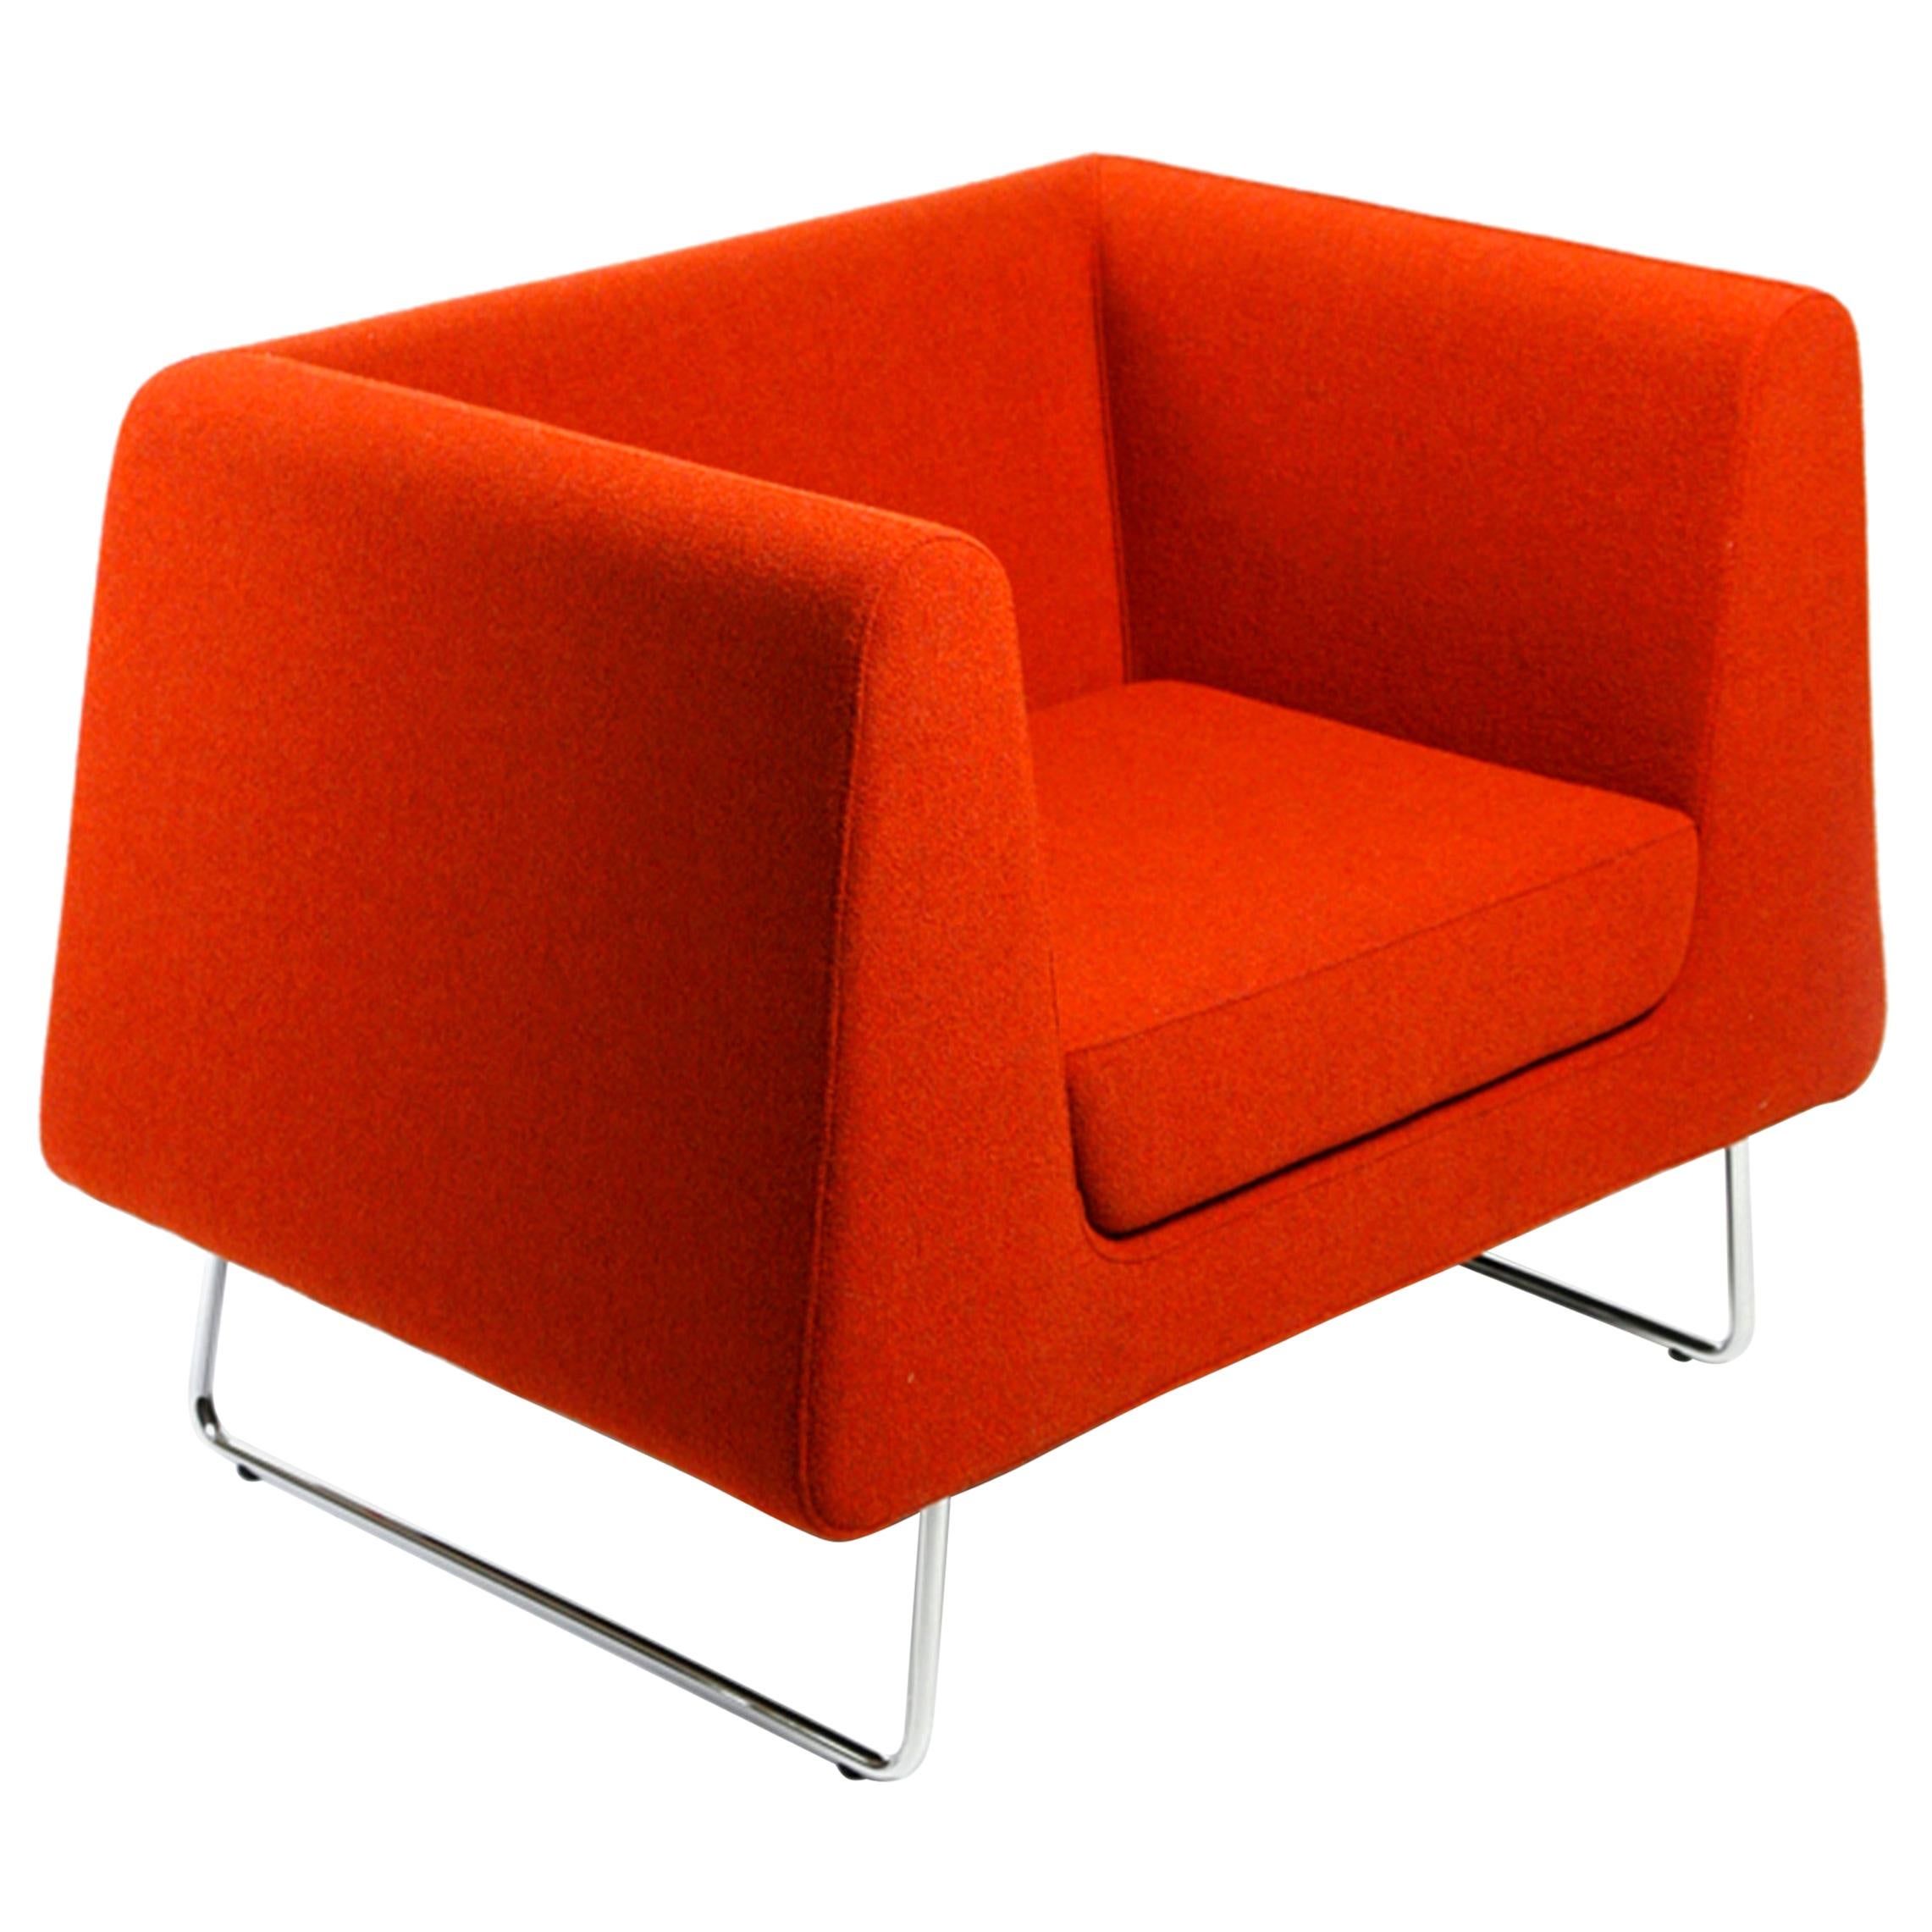 Inno Jarman Lounge Chair Designed by Steinar Hindenes